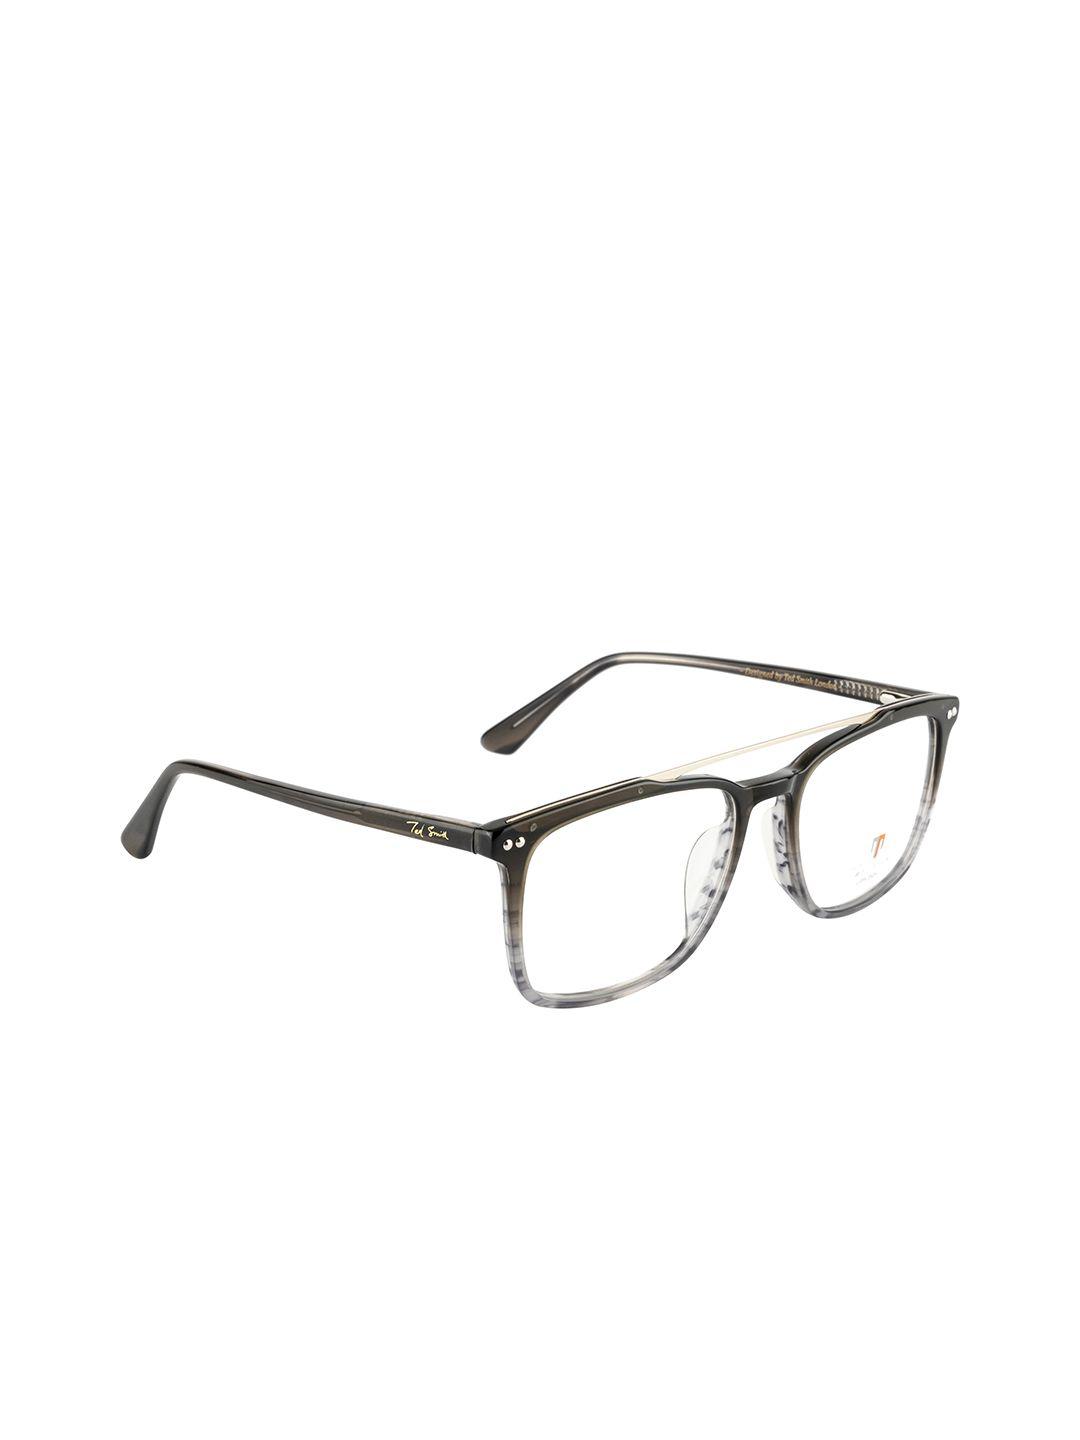 ted smith unisex grey full rim aviator frames eyeglasses